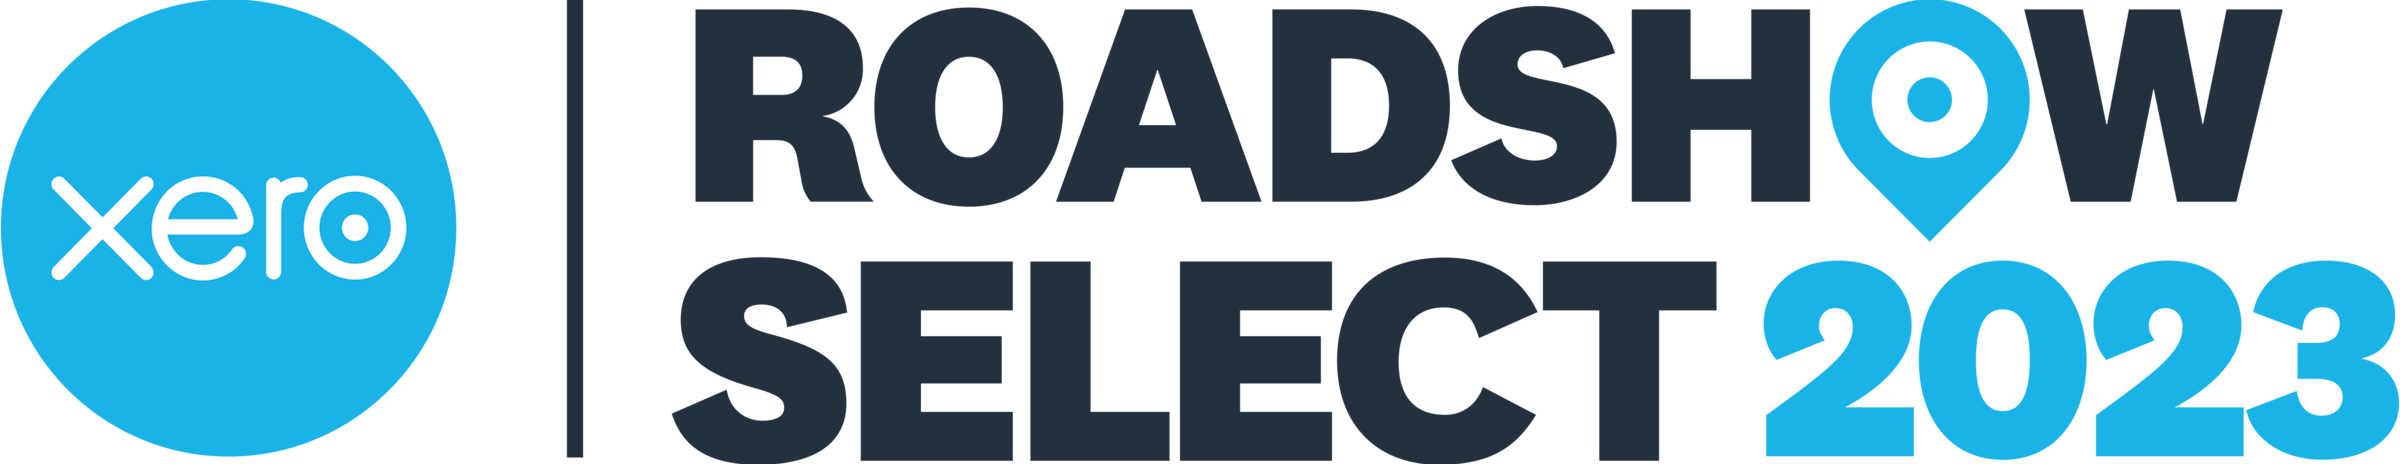 Roadshow Select 2023 logo